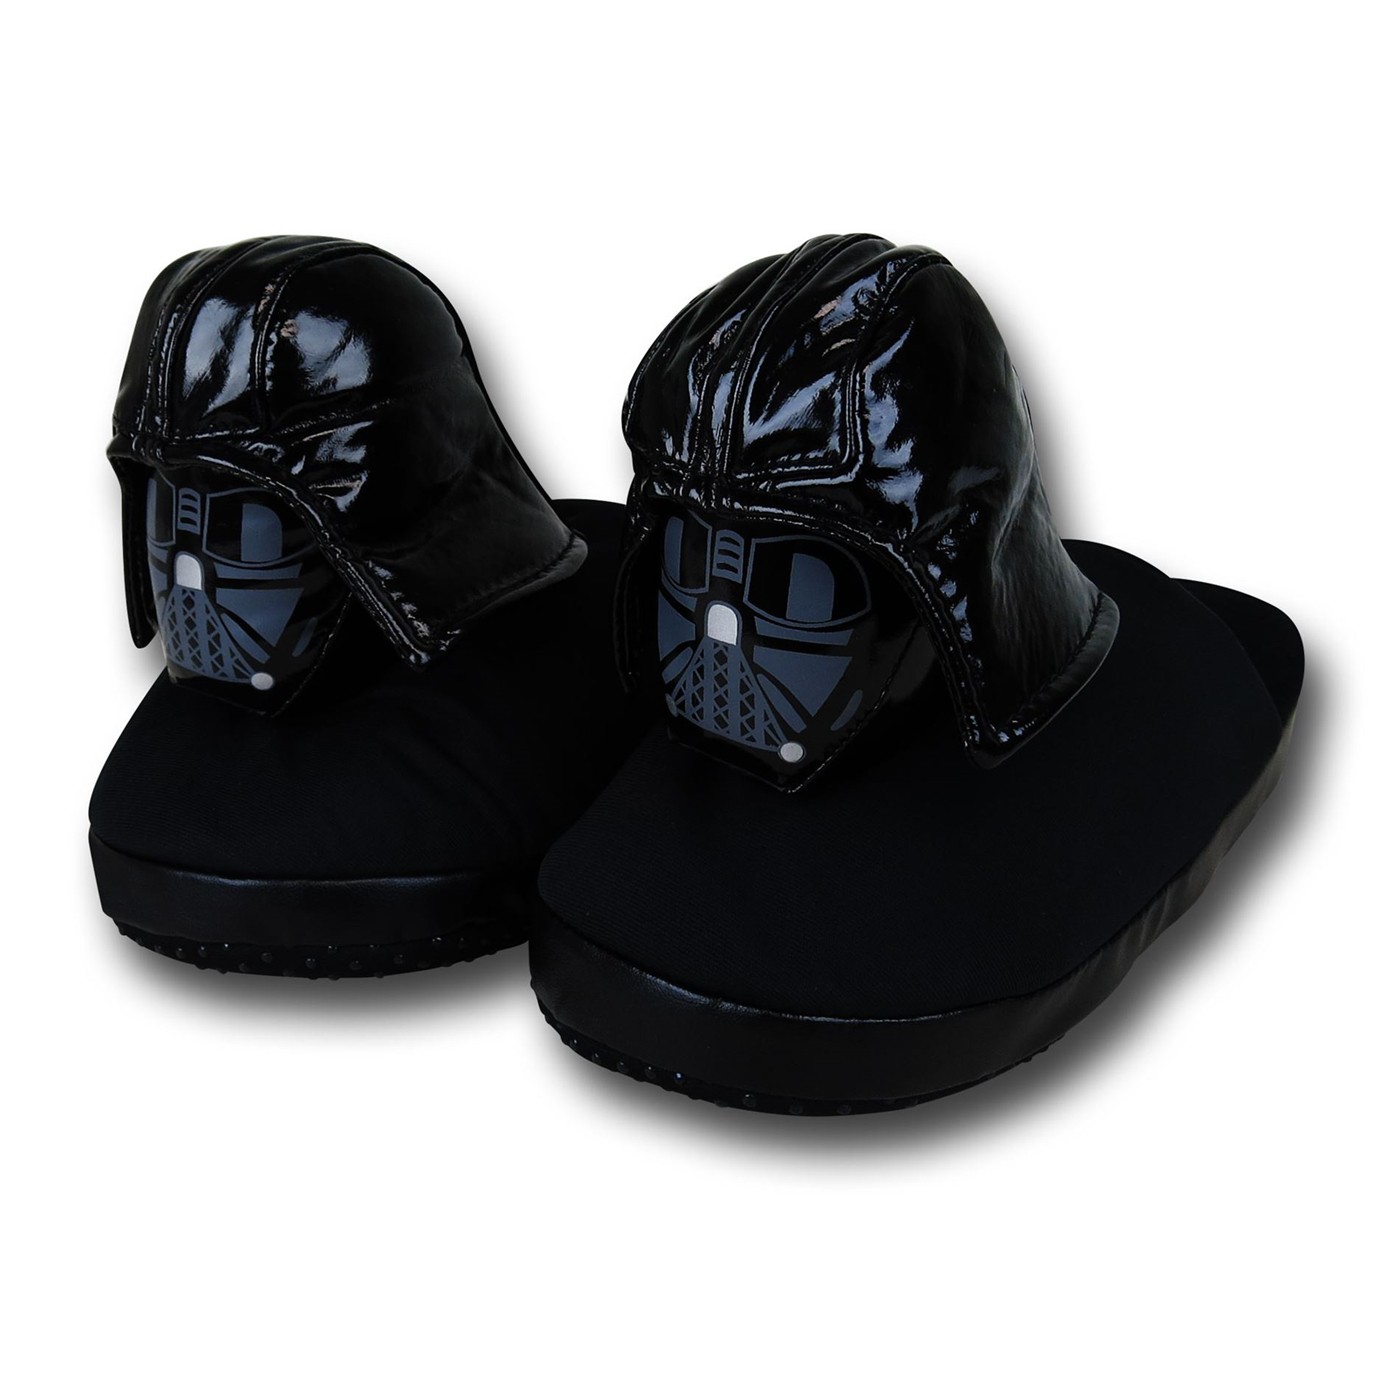 Star Wars Darth Vader Women's Slippers